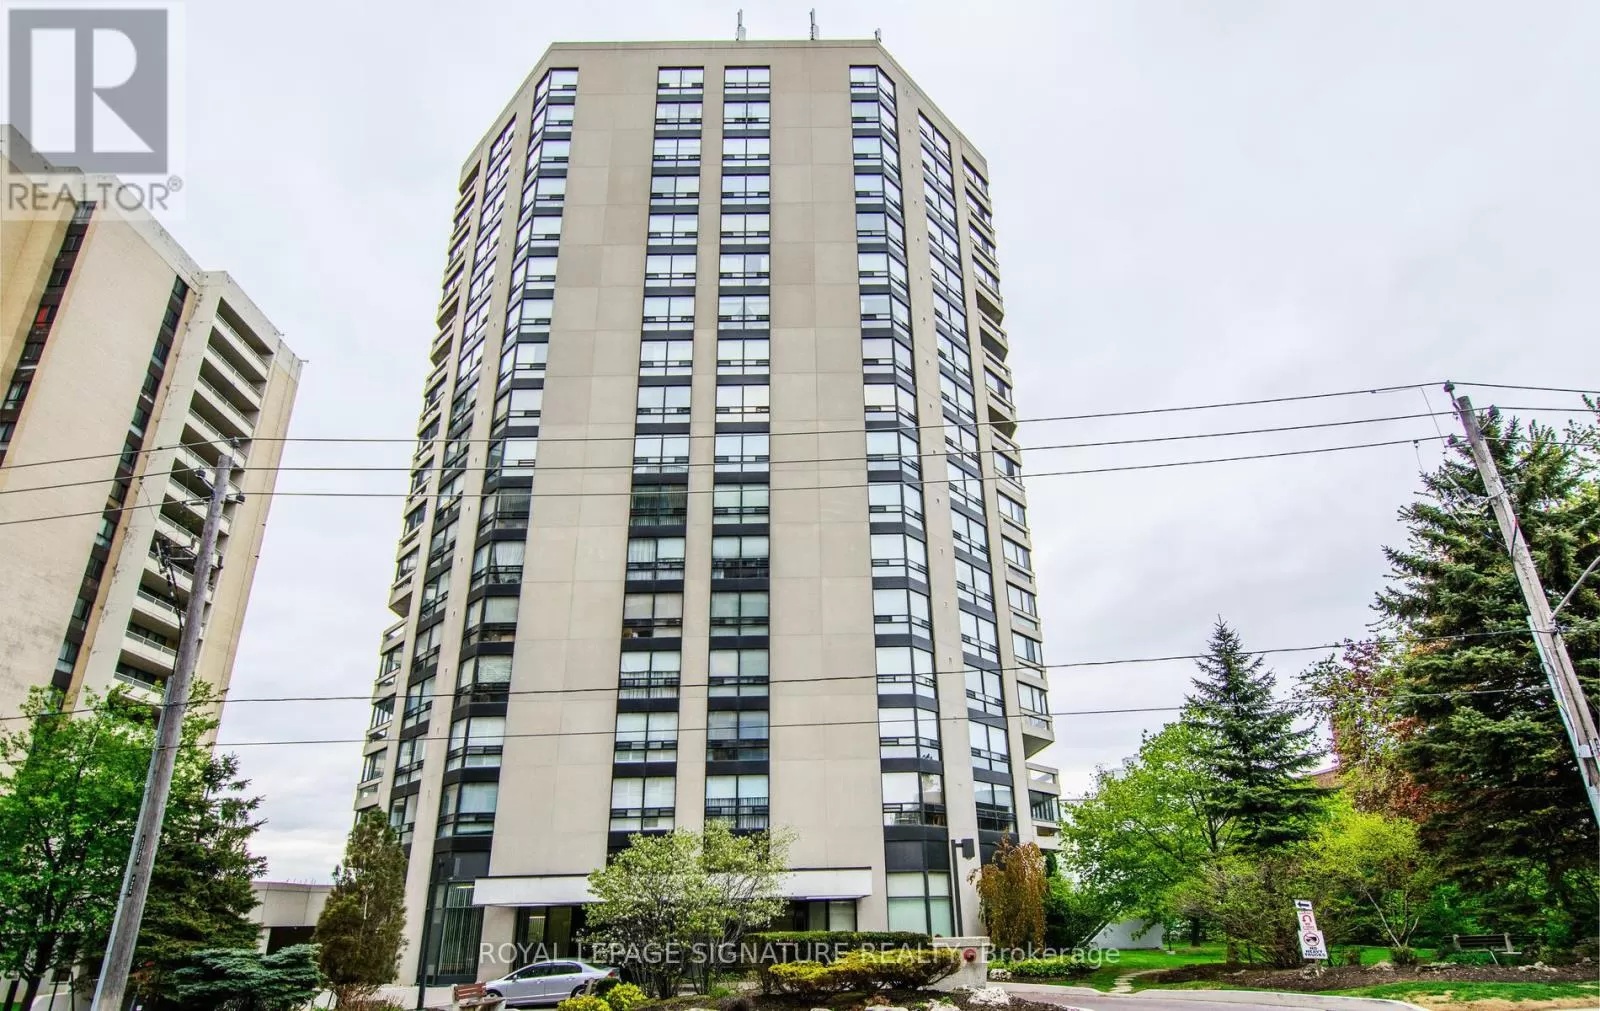 Apartment for rent: 801 - 240 Heath Street W, Toronto, Ontario M5P 3L5